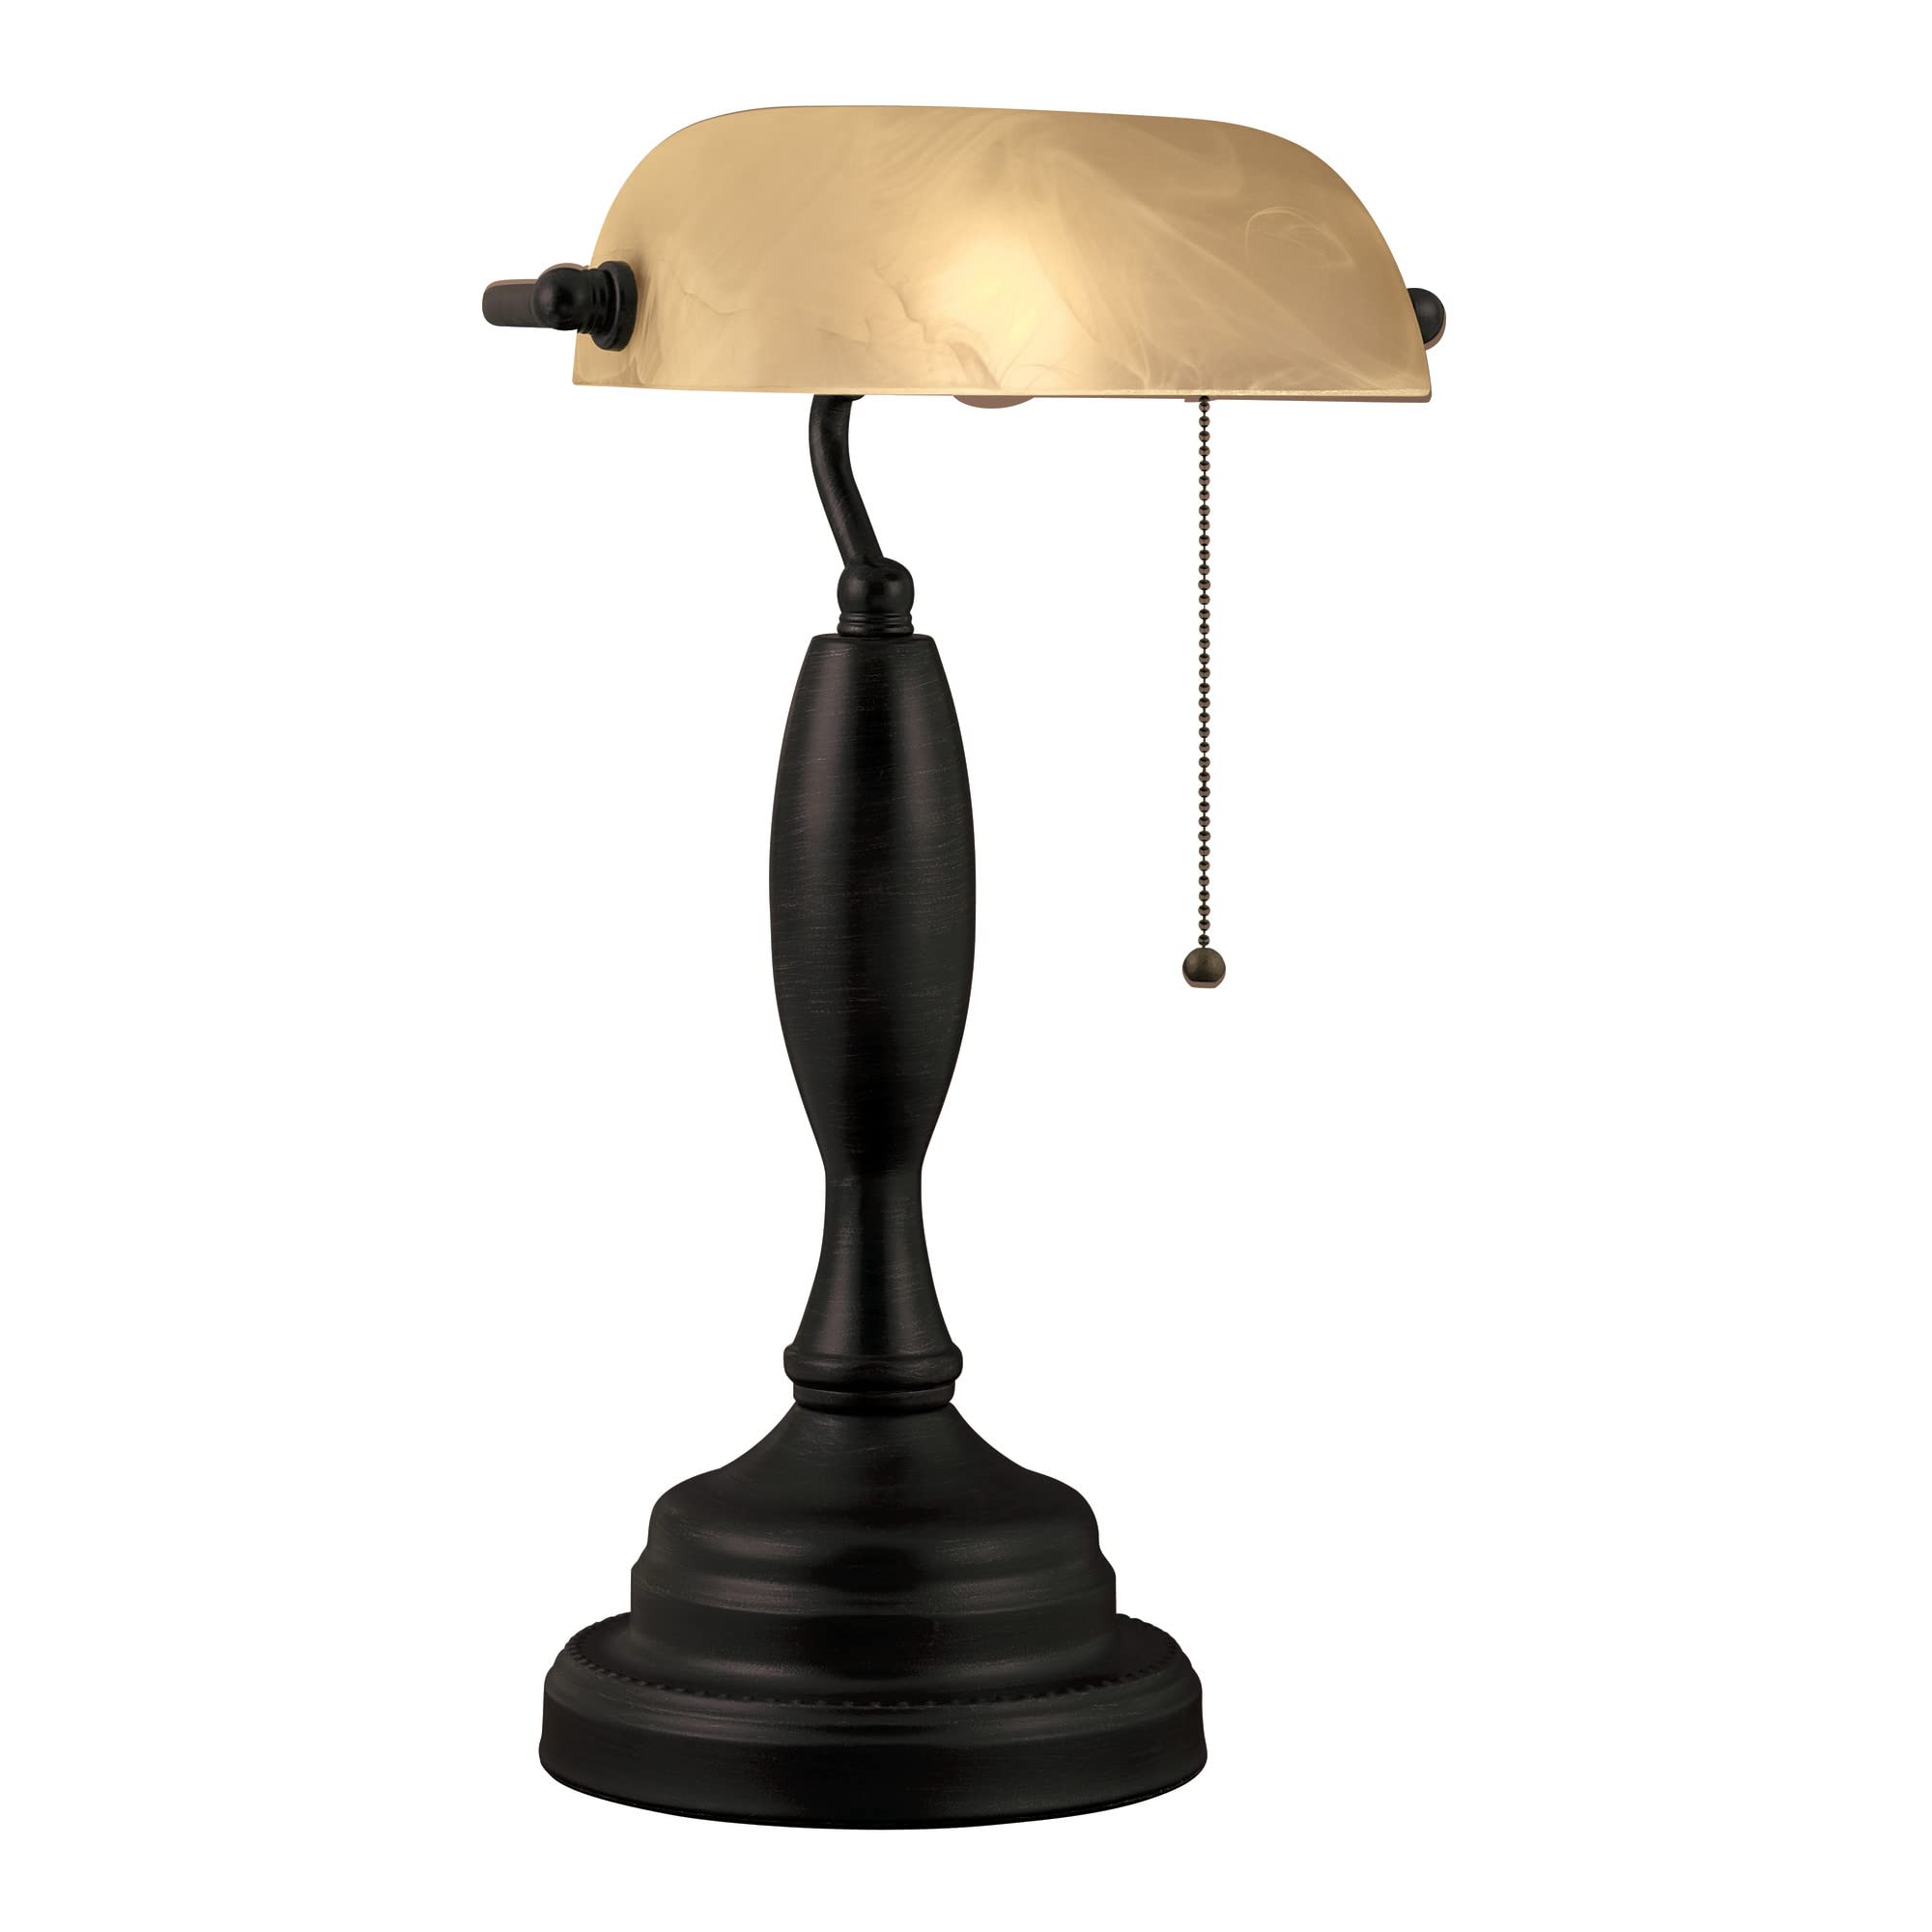 Catalina 21469-000 Traditional Desk Lamp, 17.75", Bronze